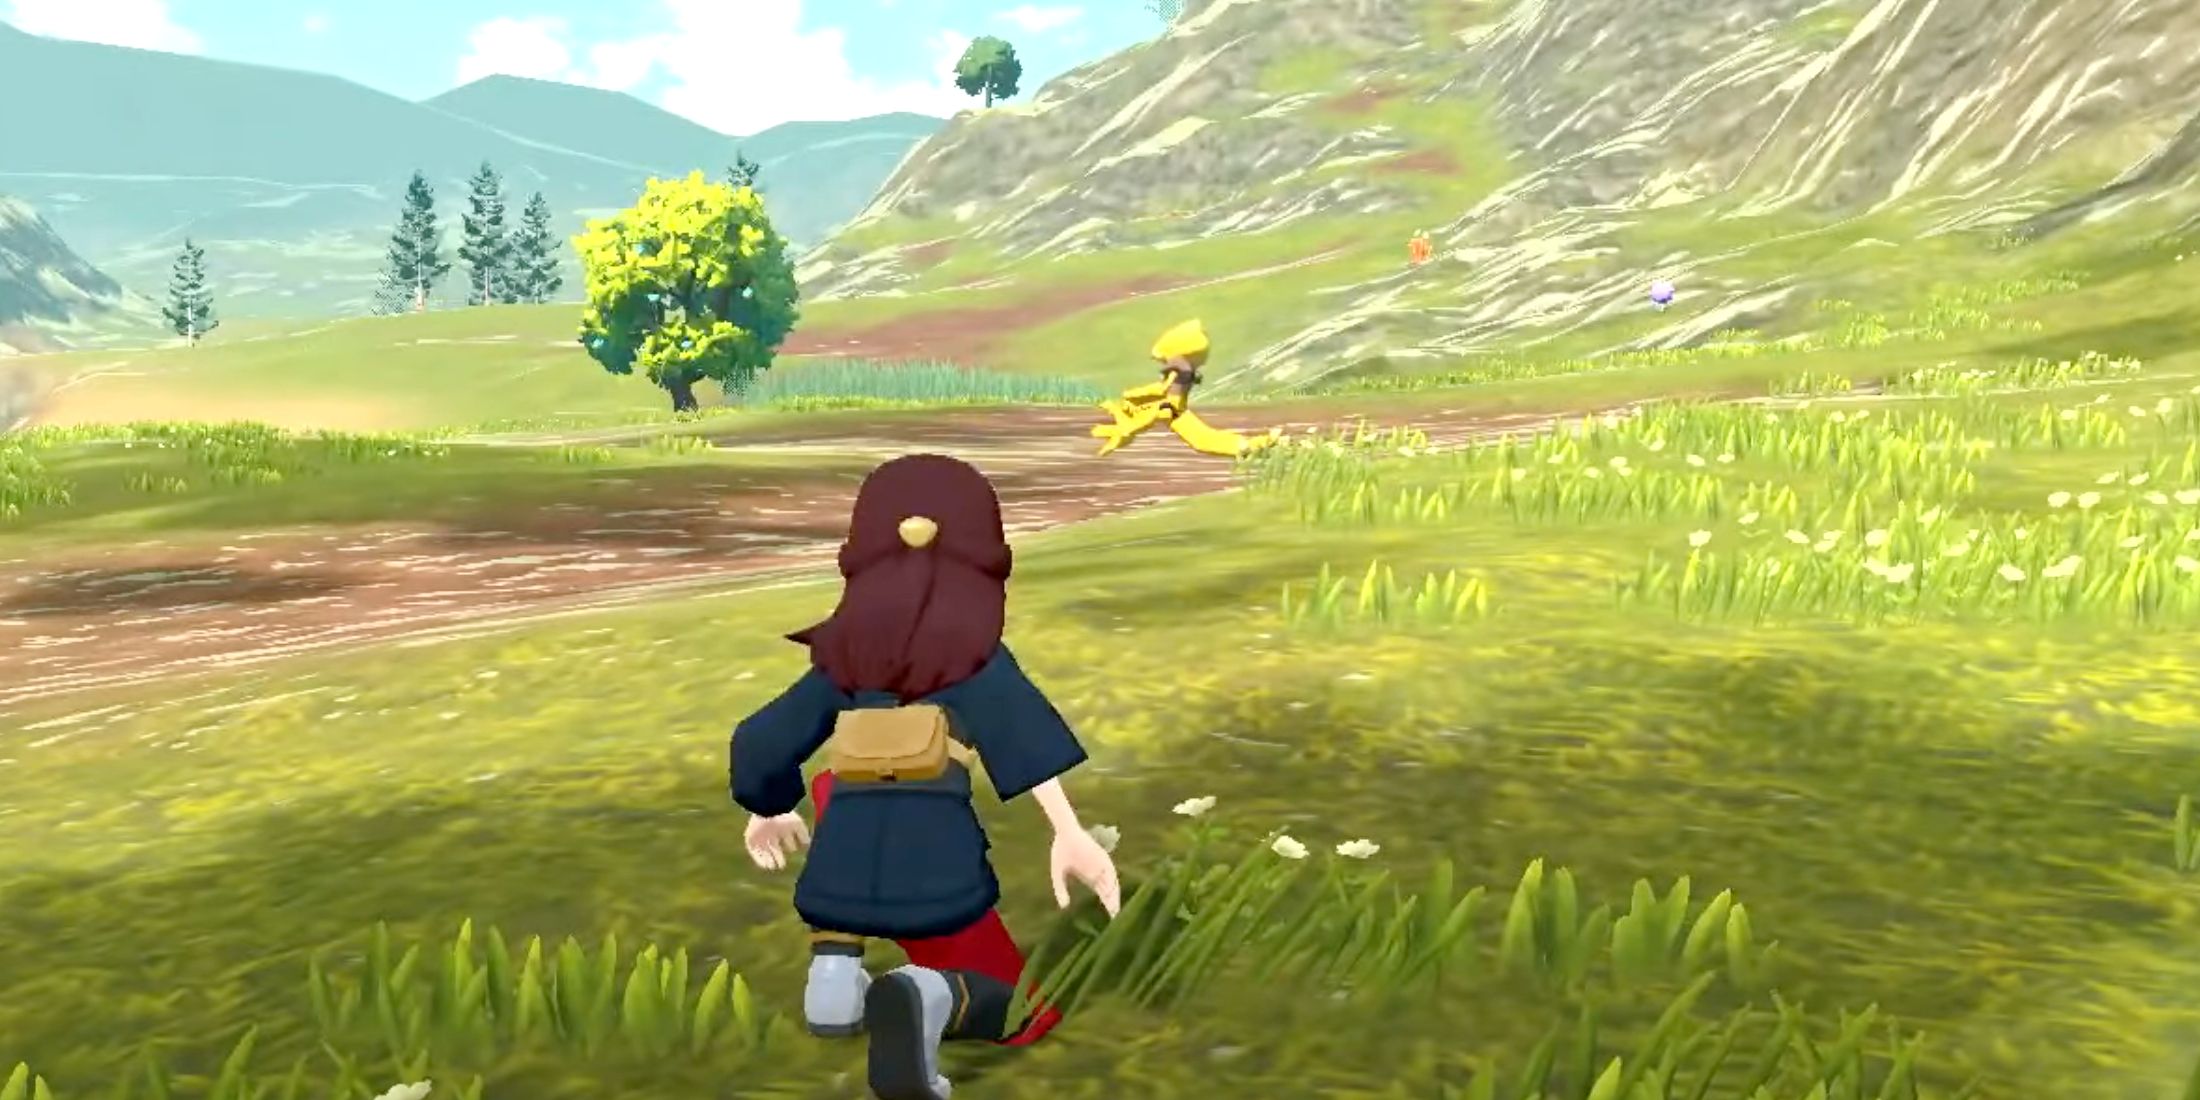 Akari approaching an Abra in Pokémon Legends: Arceus